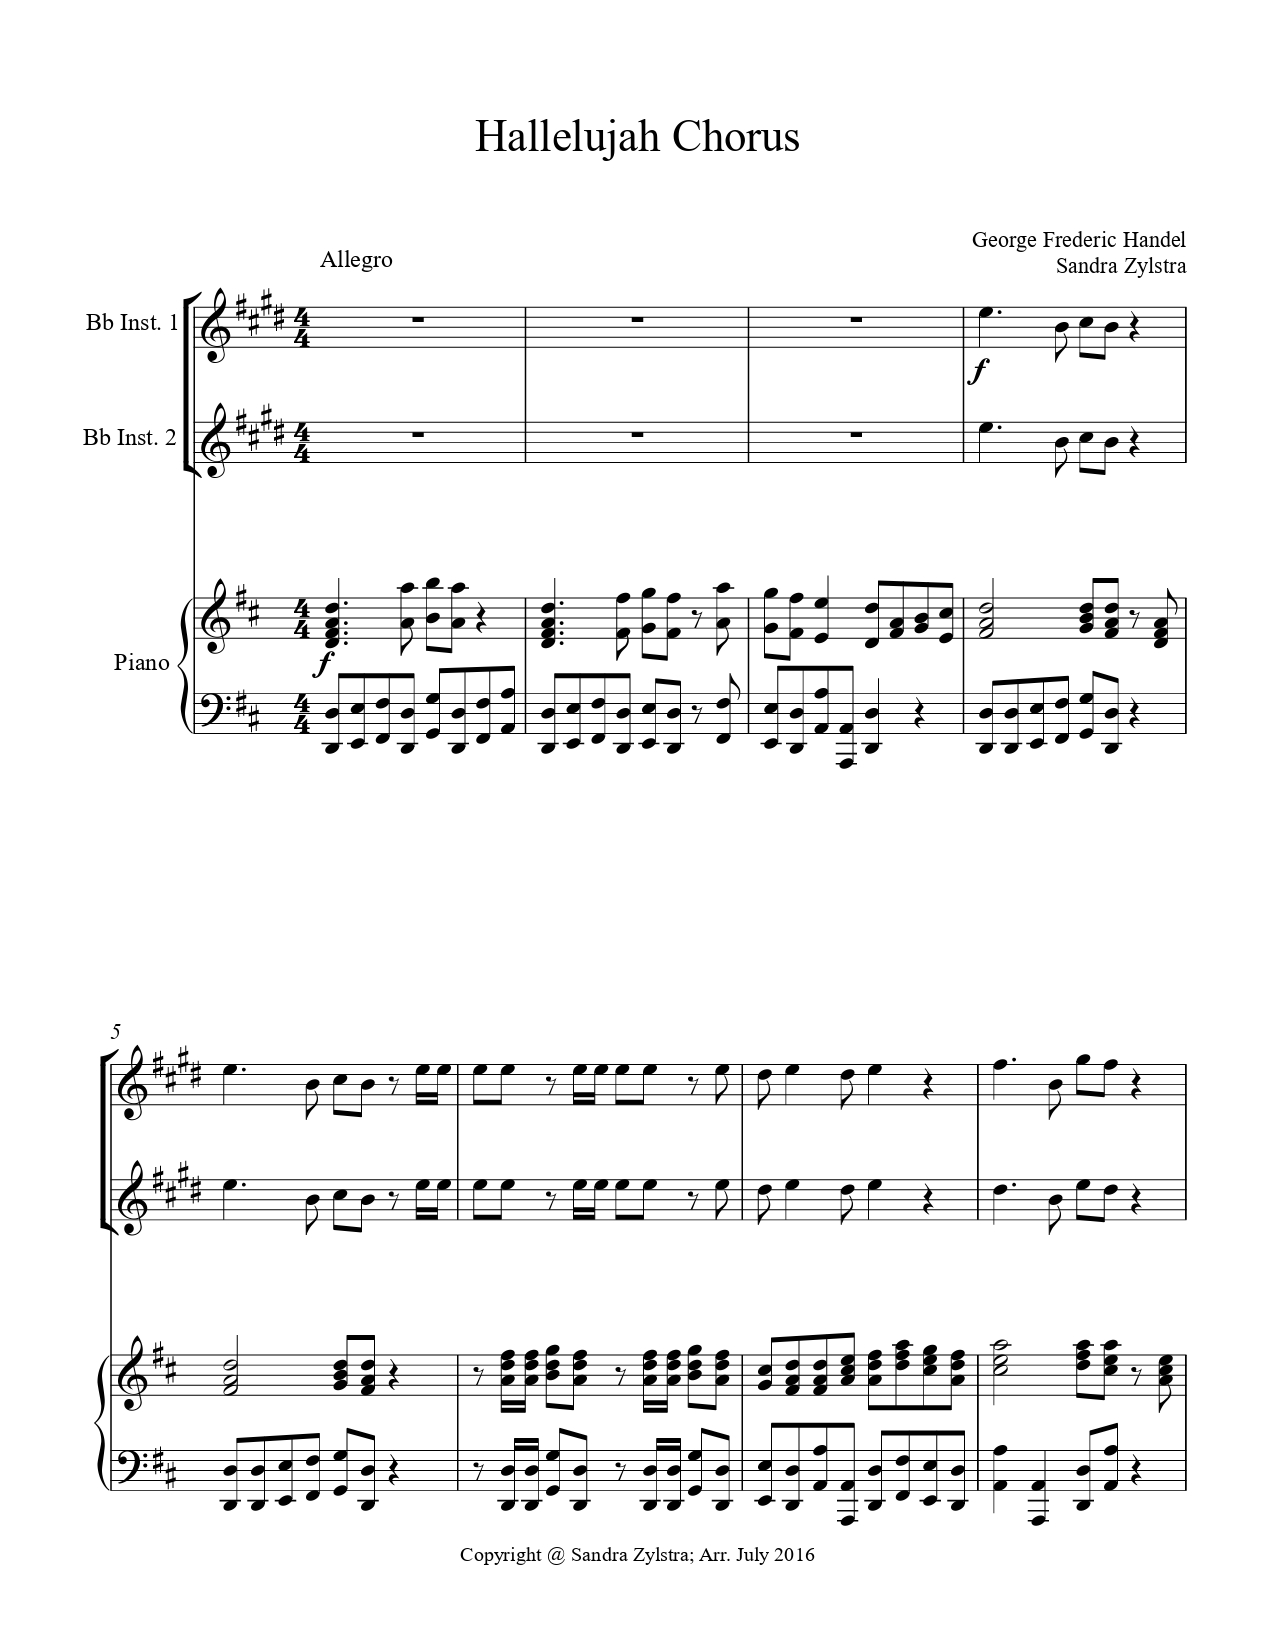 Hallelujah Chorus Bb instrument duet parts cover page 00021